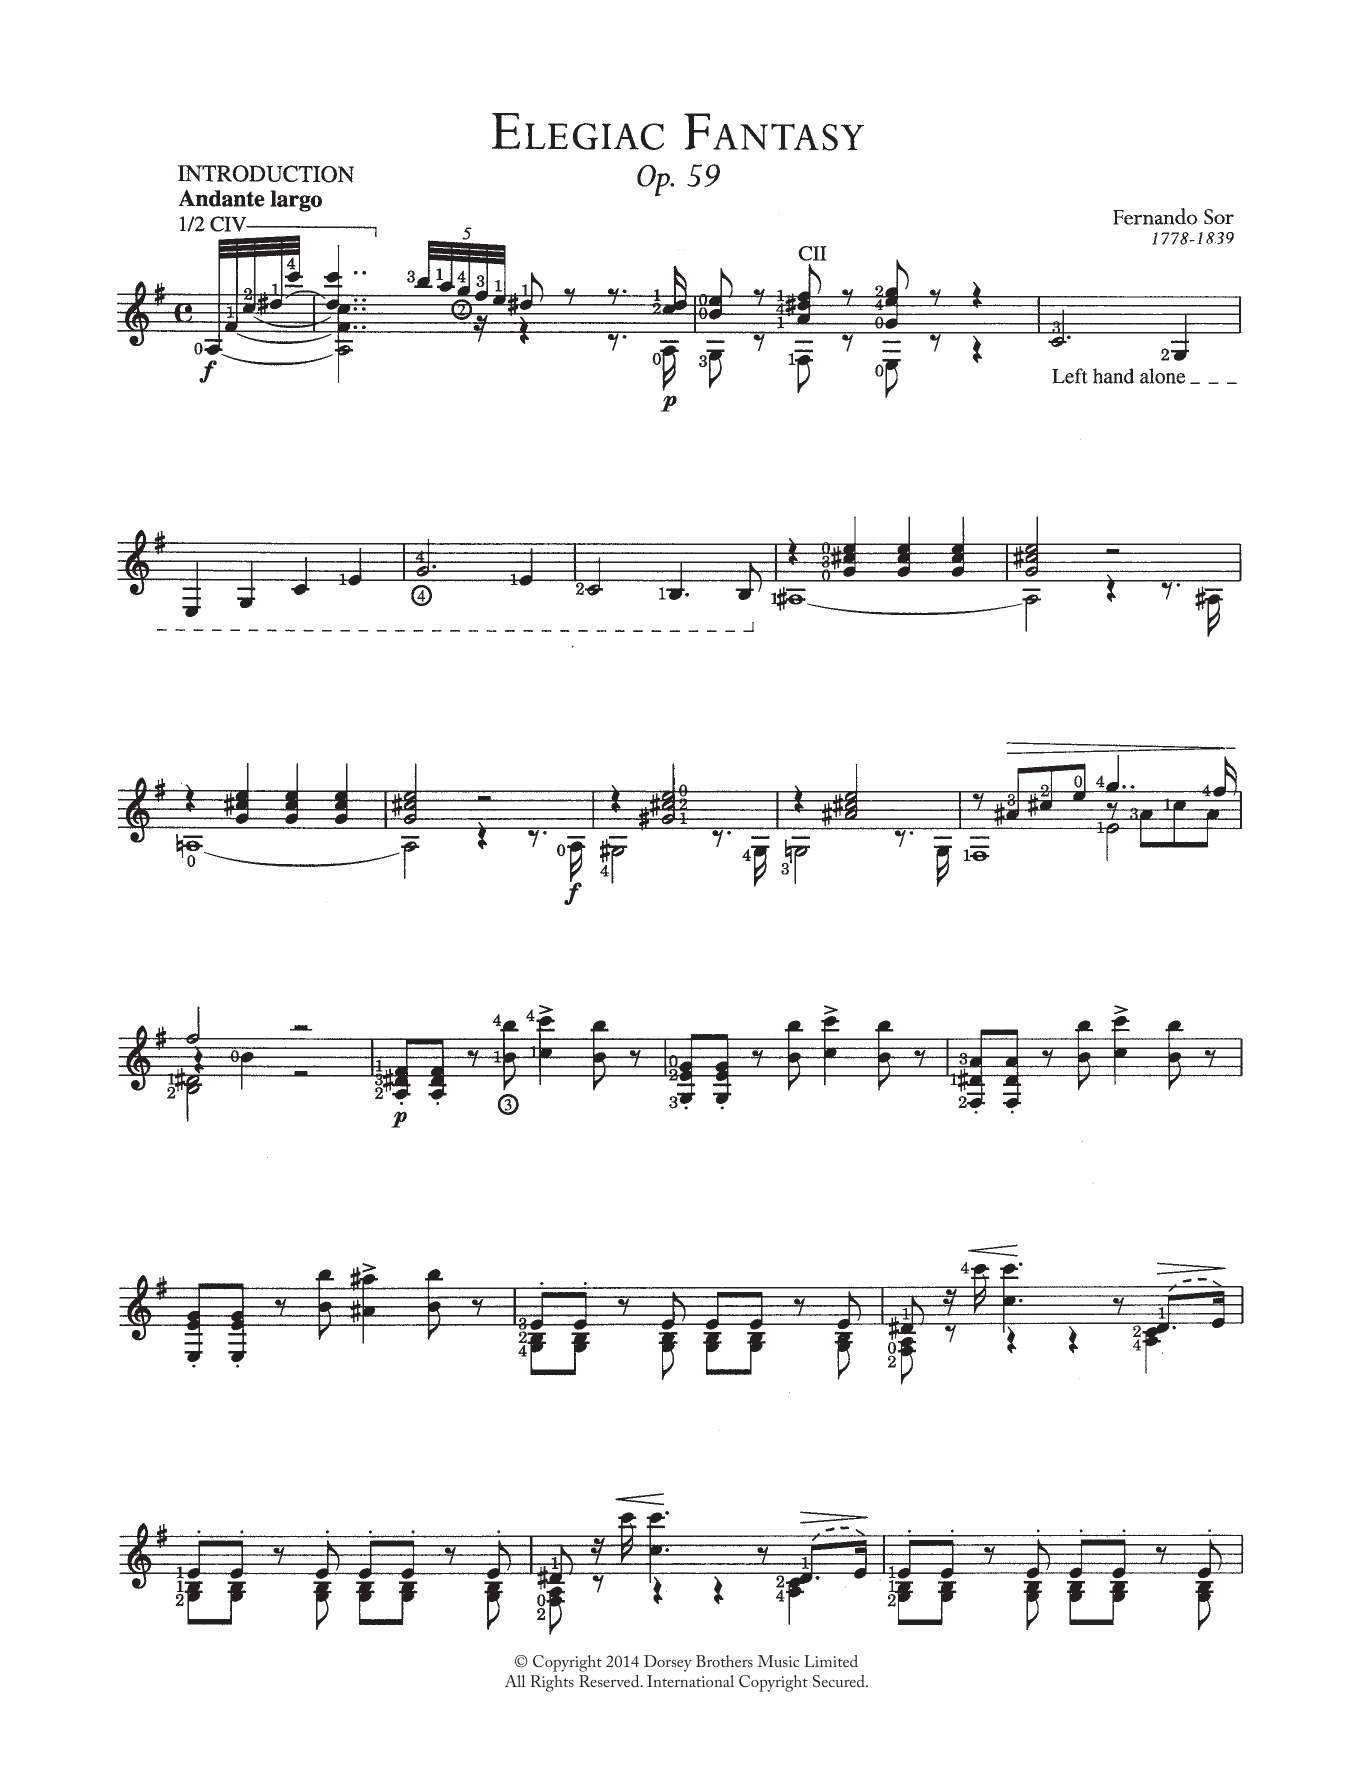 Download Fernando Sor Elegaic Fantasy, Op.59 Sheet Music and learn how to play Guitar PDF digital score in minutes